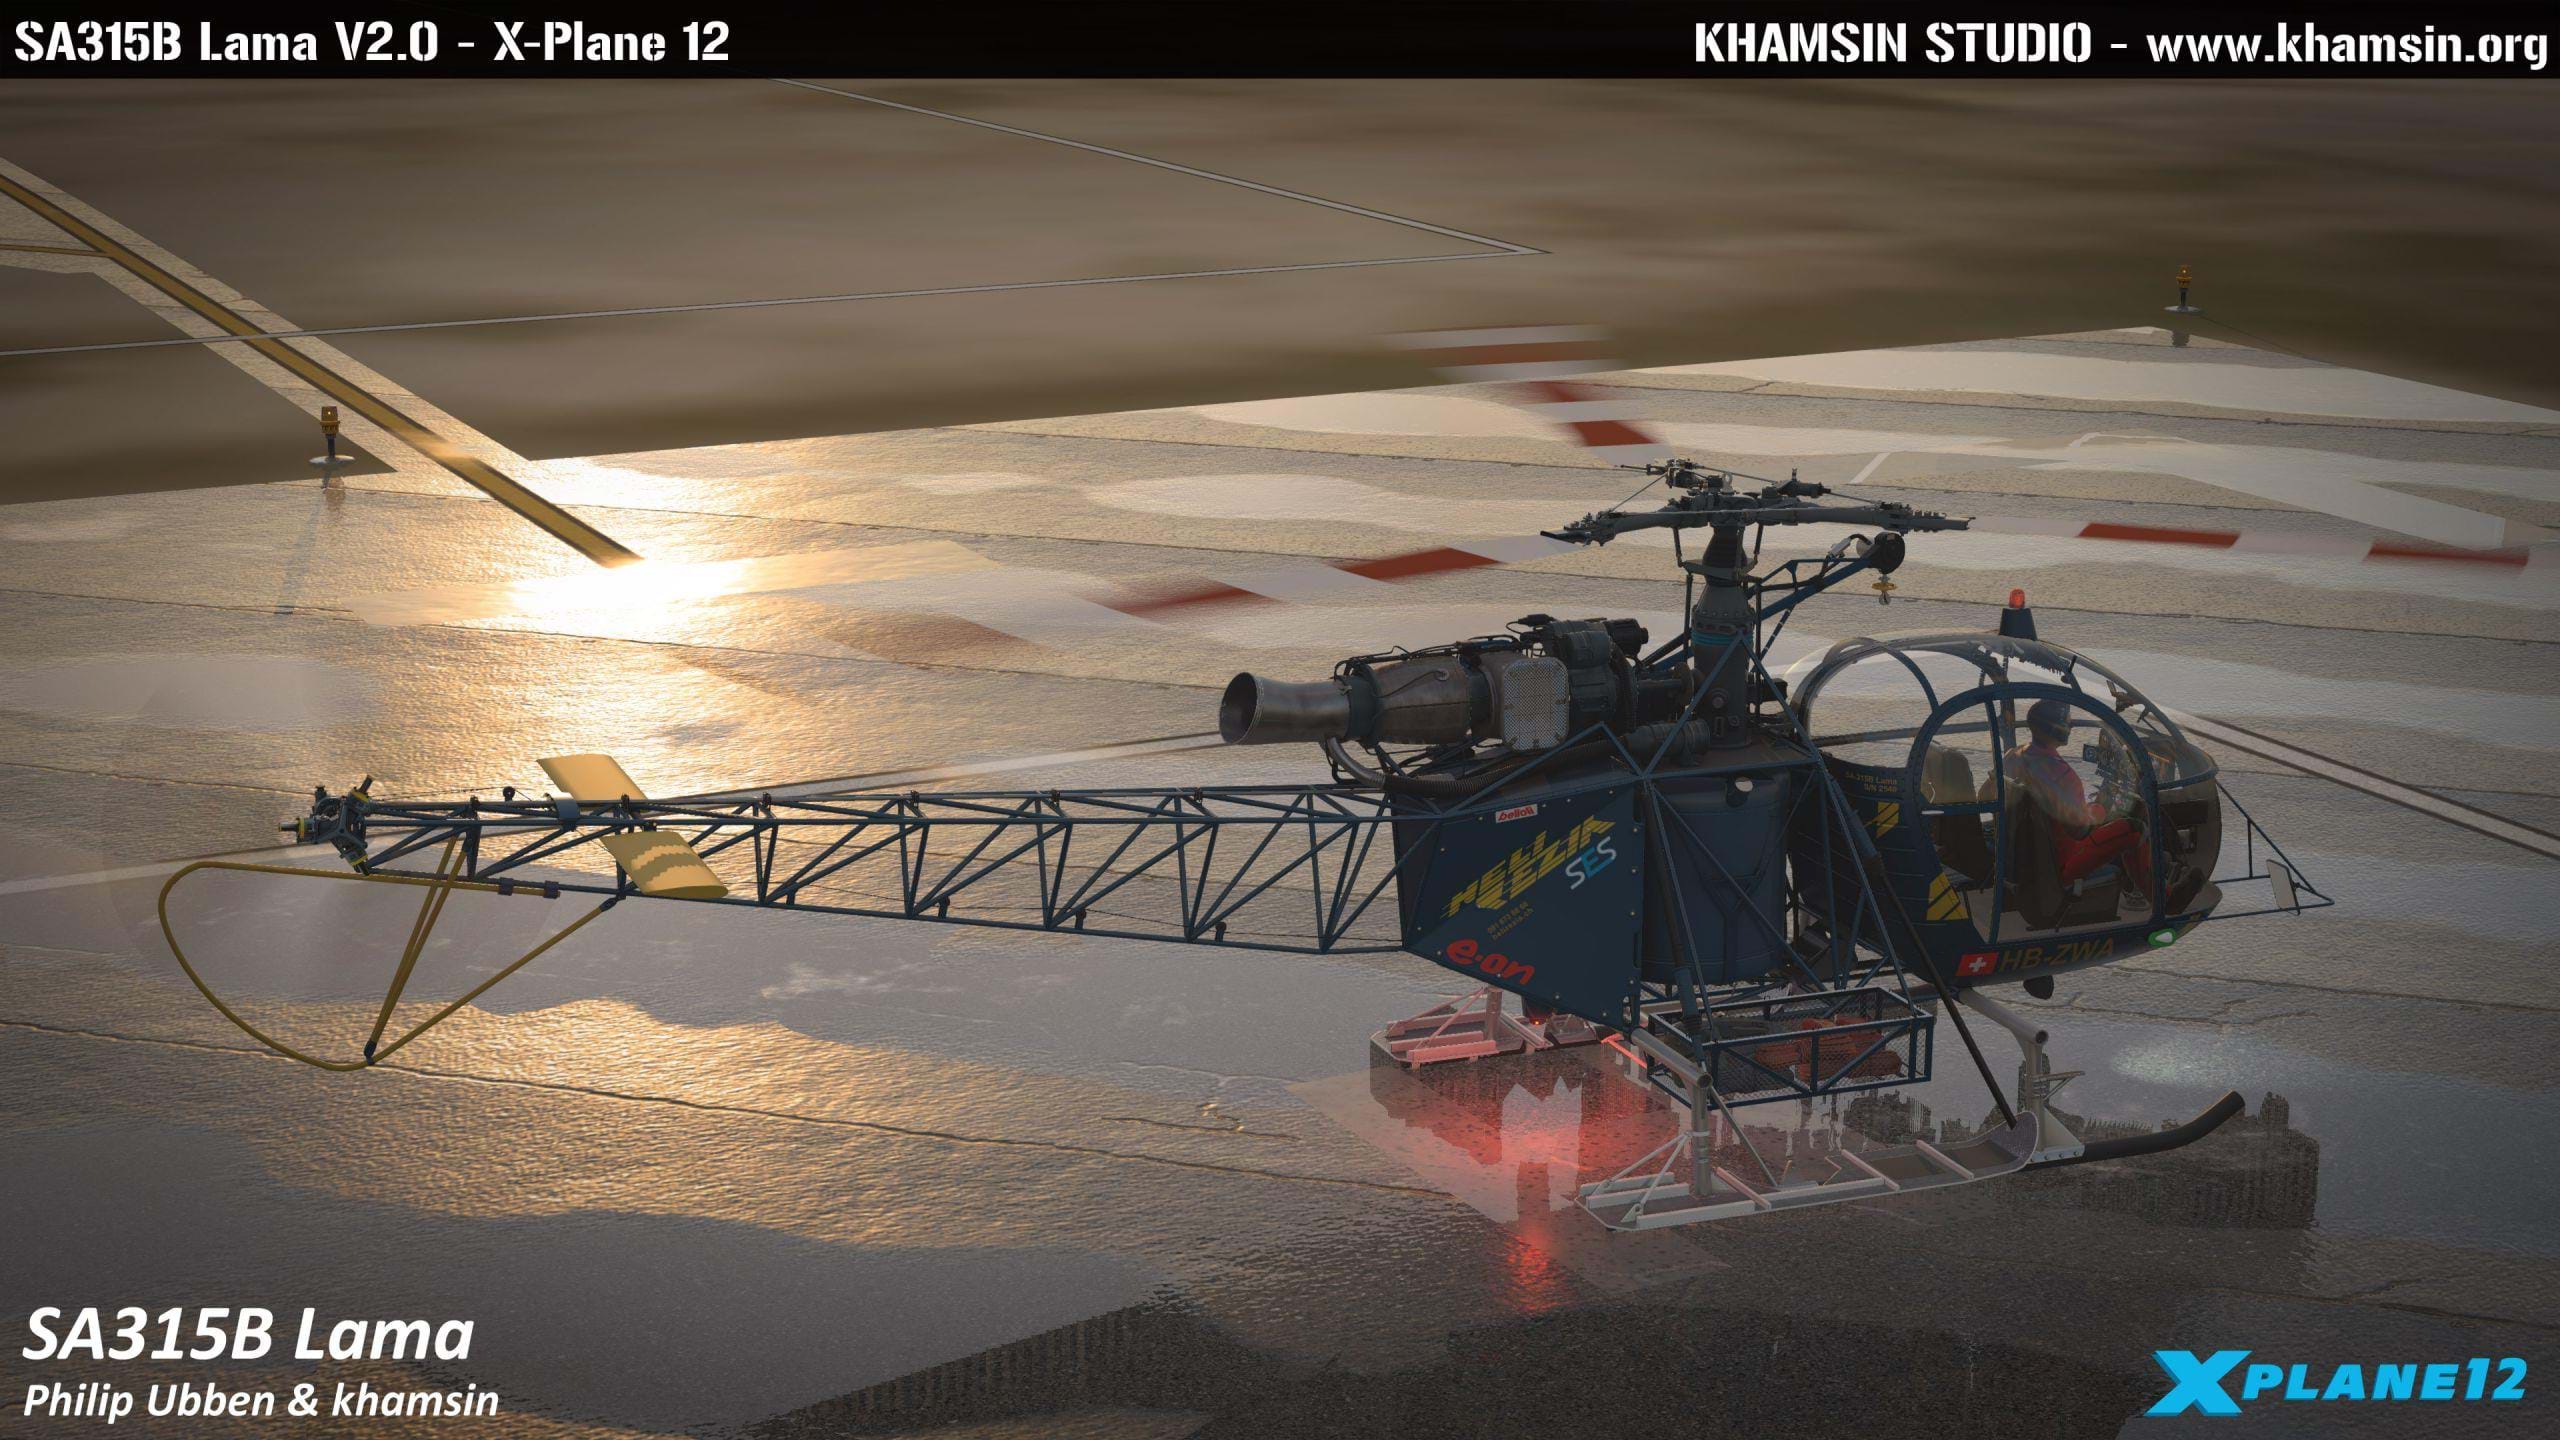 Philip Ubben/Khamsin Studios SA-315 Lama being updated for X-Plane 12